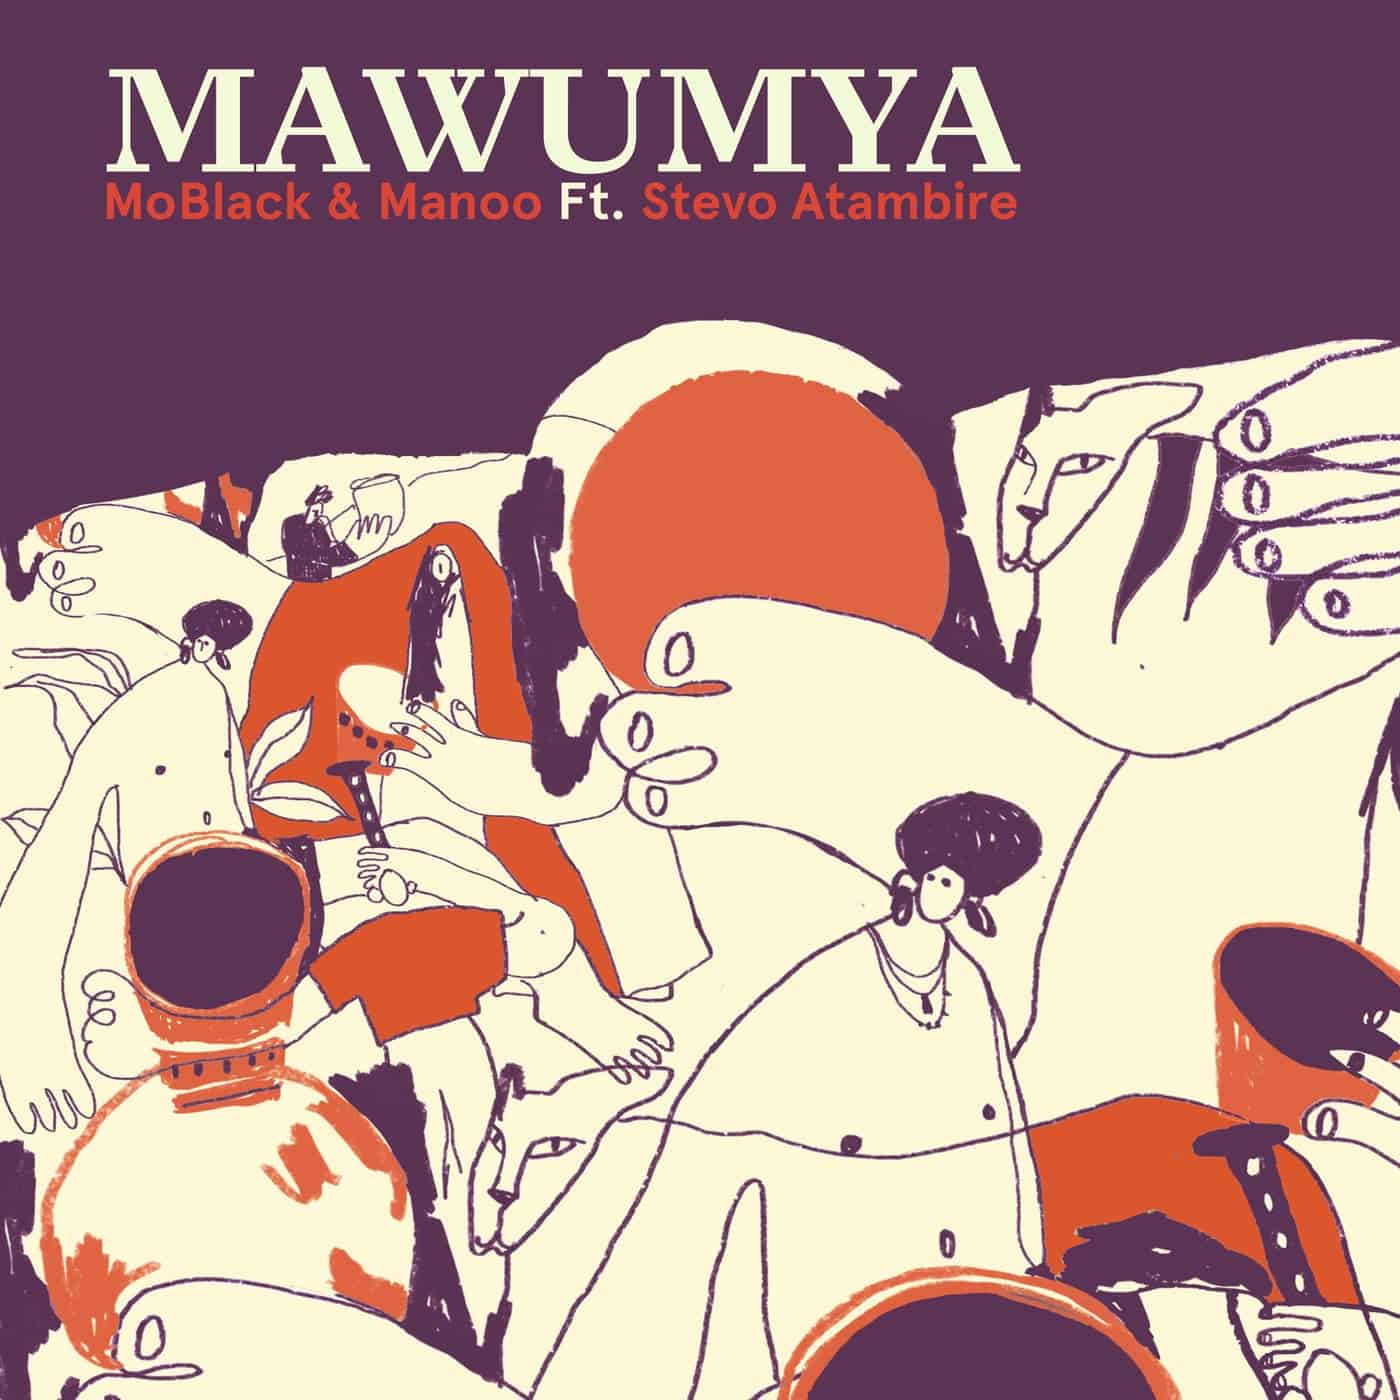 image cover: Manoo, MoBlack, Stevo Atambire - Mawumaya / MBR463